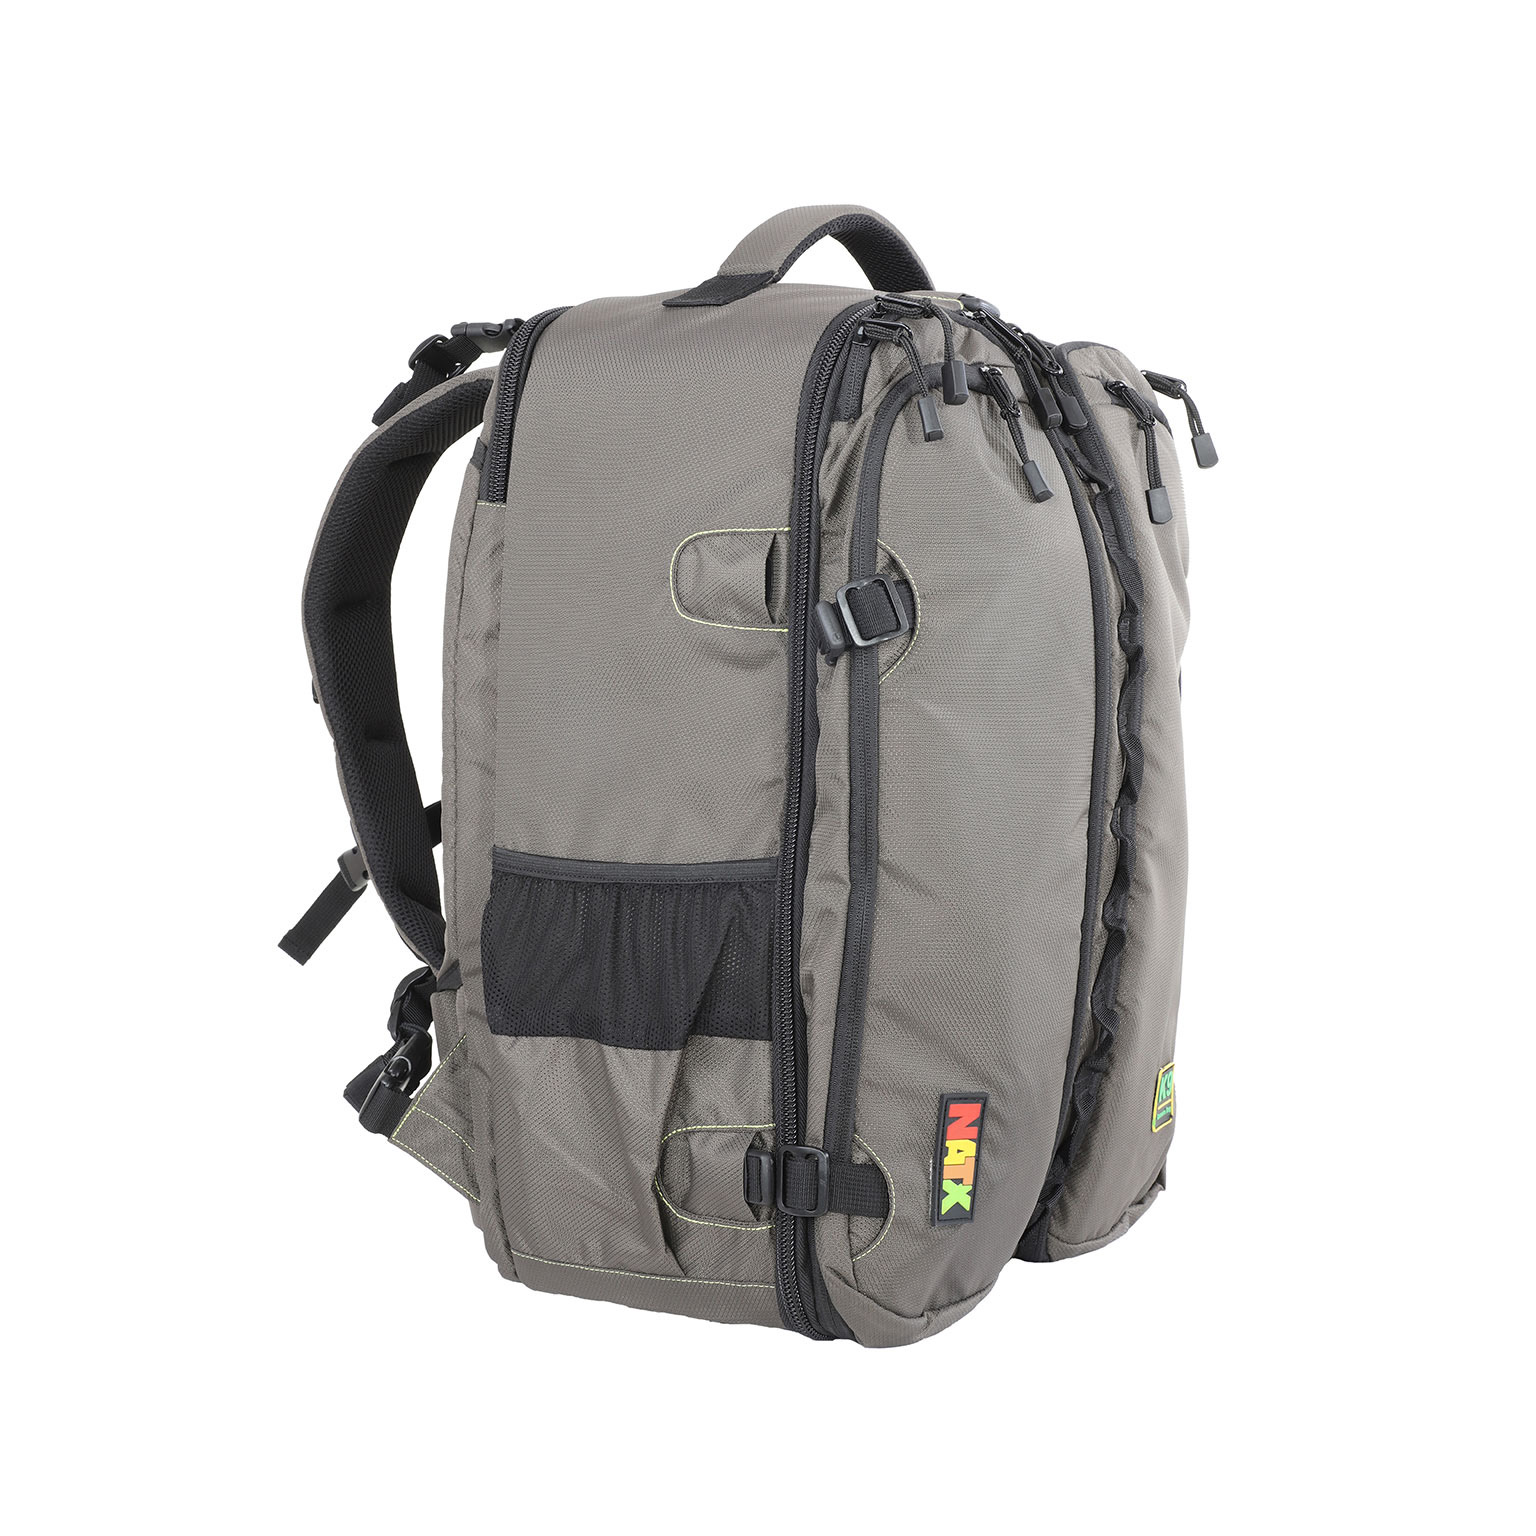 NATX K9 Camera Bag - Elephant Grey - NATX Bags